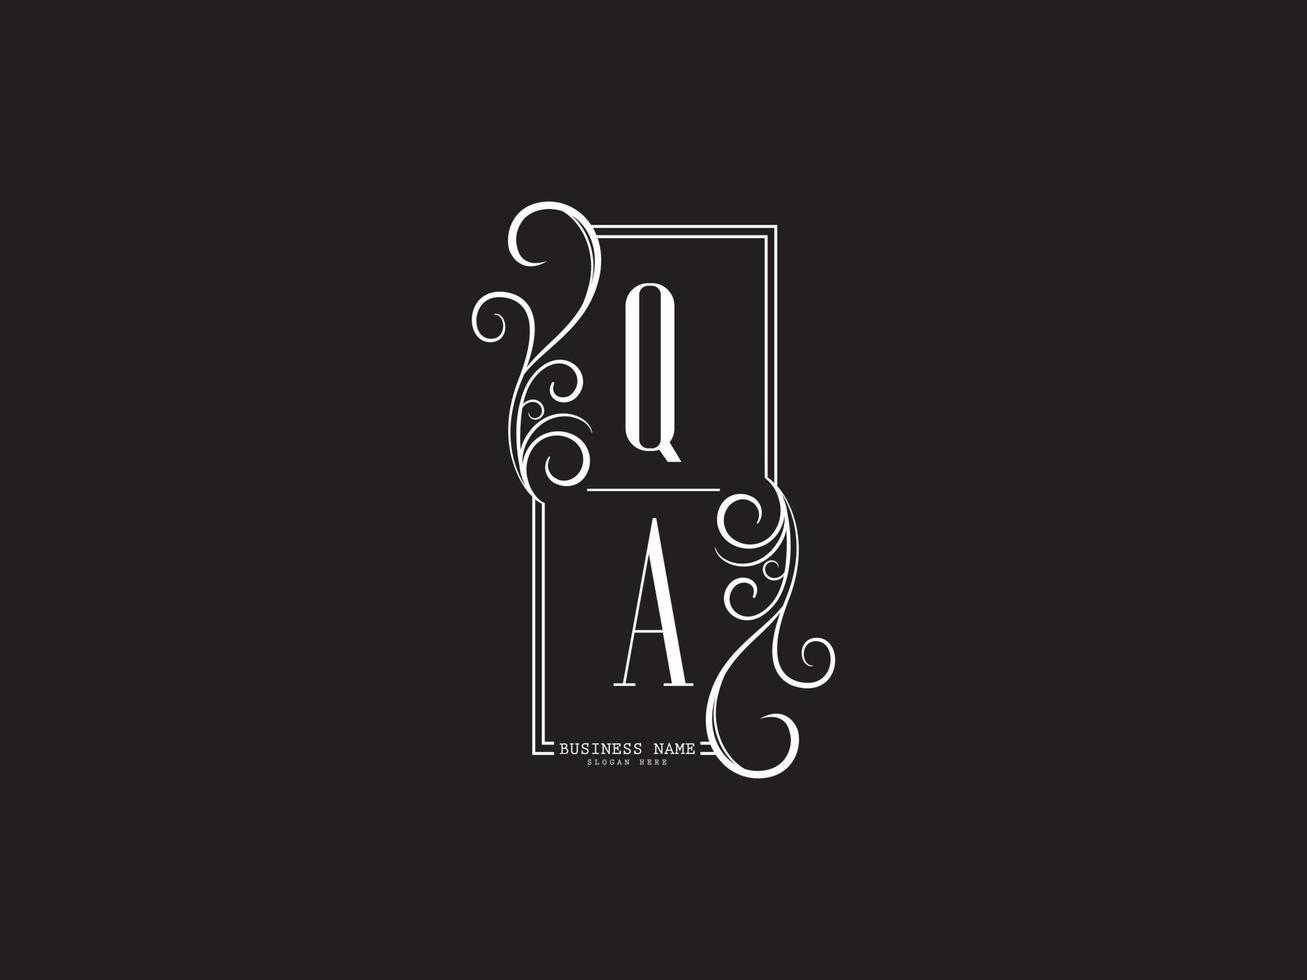 qa, qa monogramme de logo de lettres de luxe abstraites vecteur